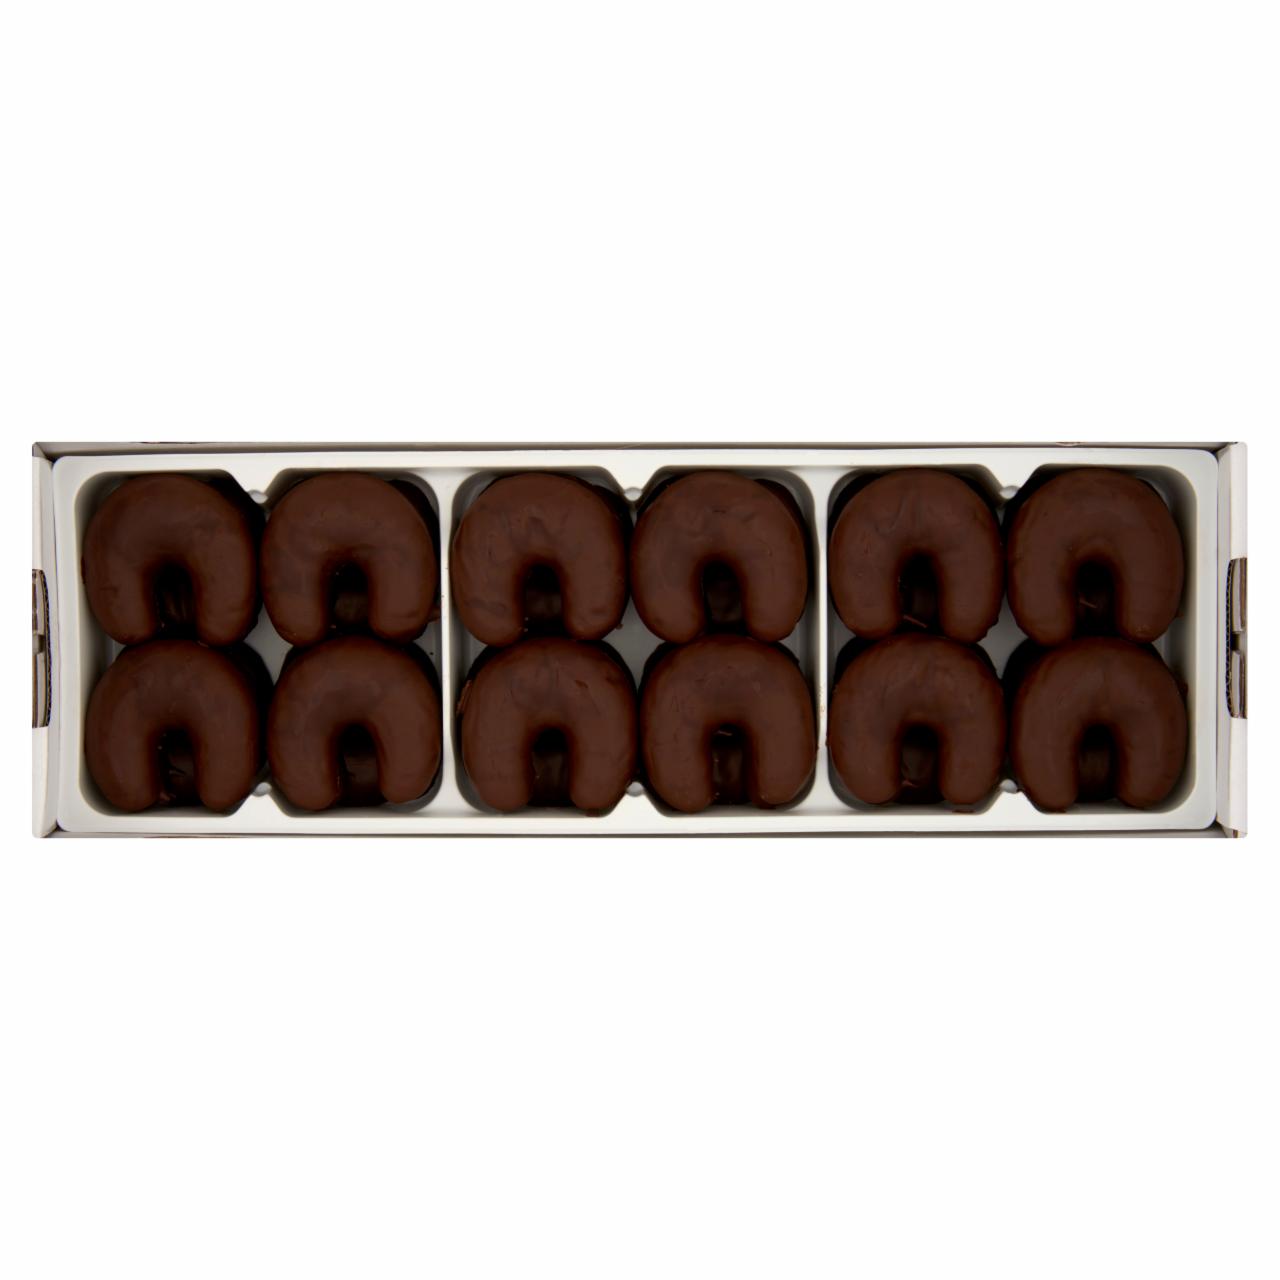 Képek - Benei csokis kifli 300 g